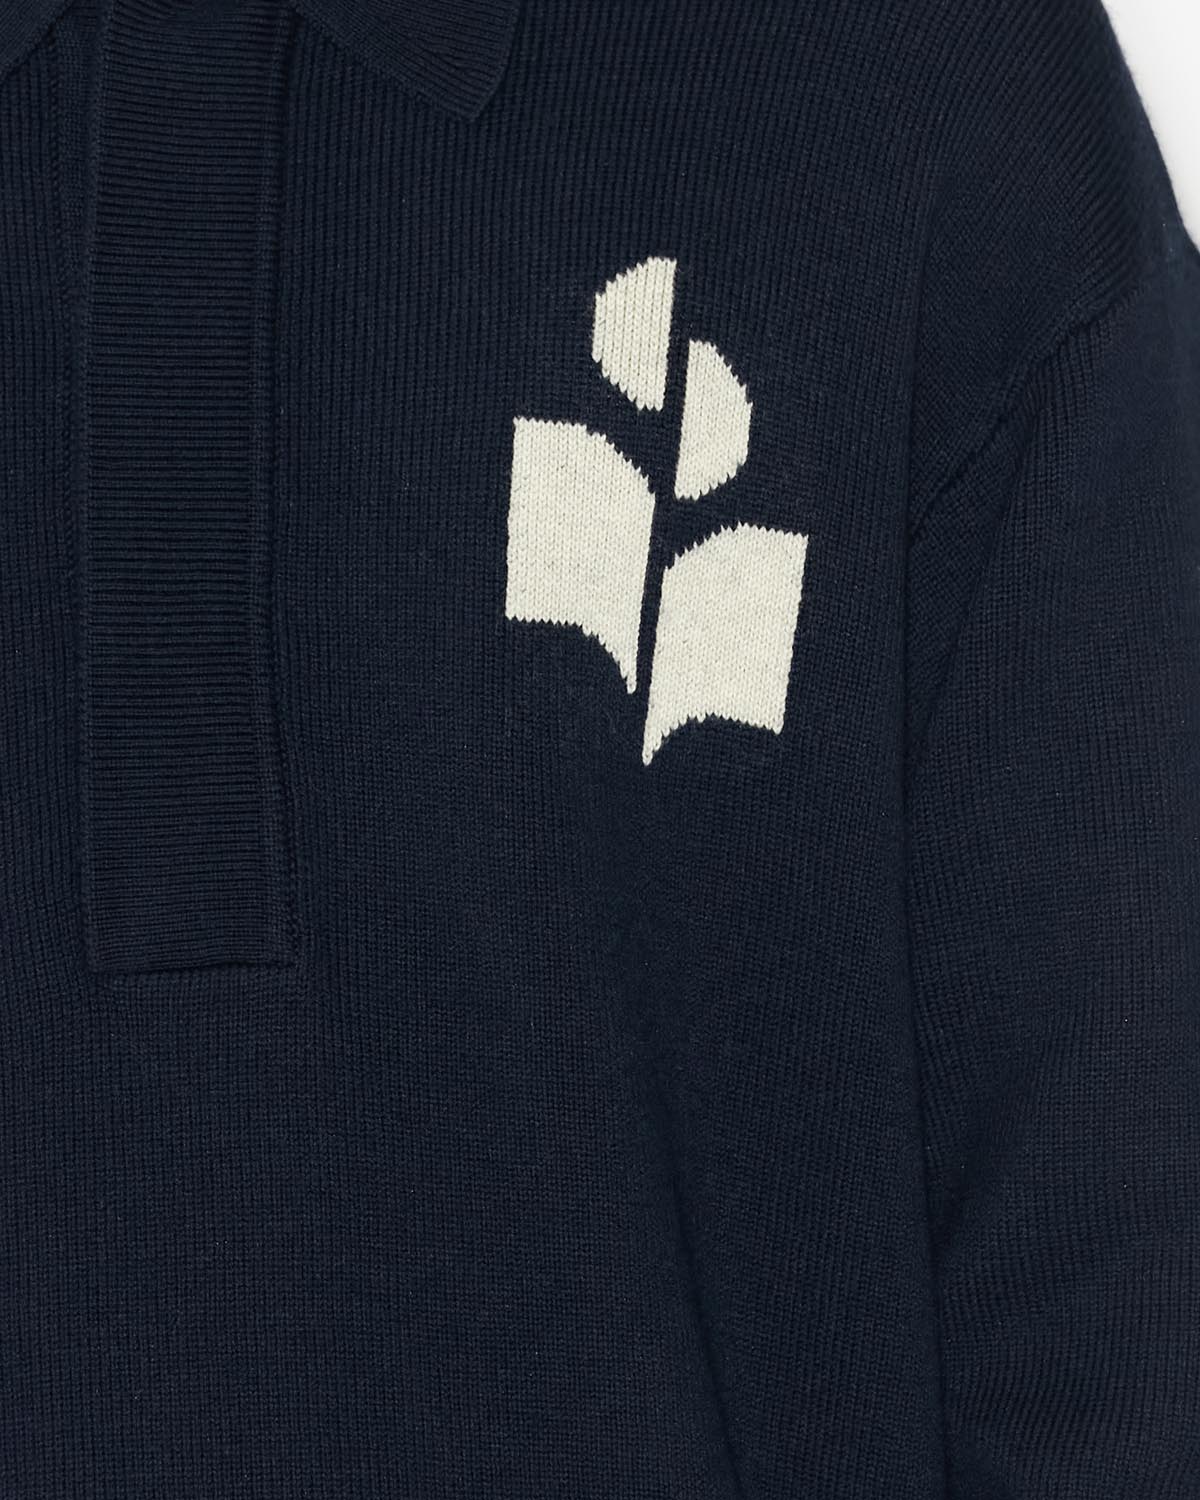 William logo 스웨터 Man Midnight 3